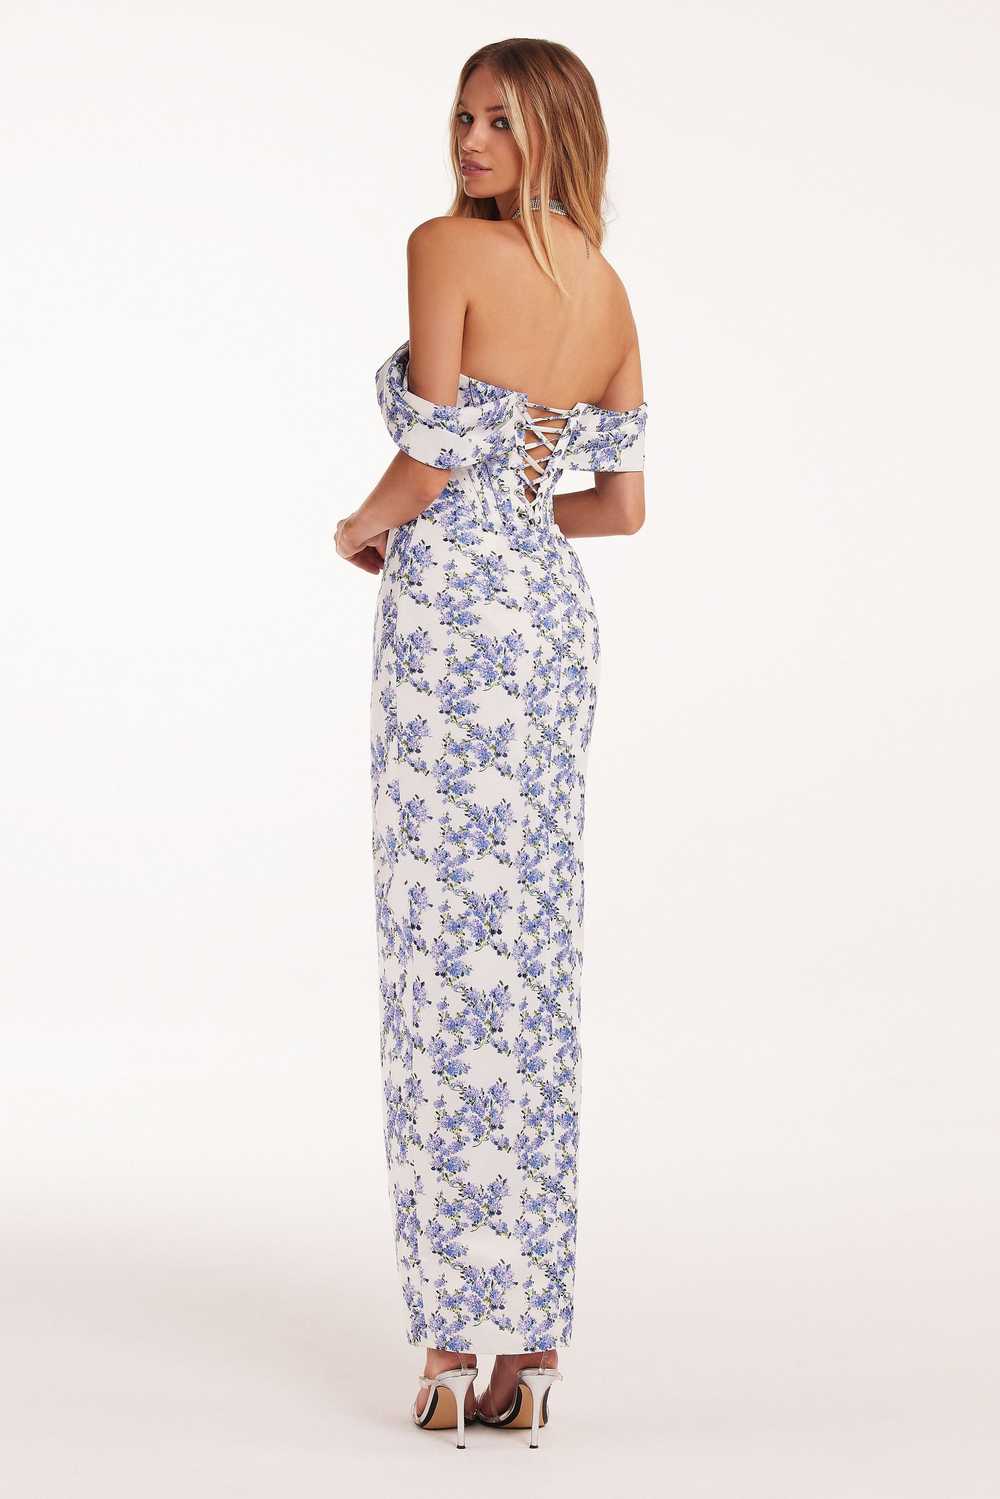 Milla Blue Hydrangea off-shoulder satin dress - image 4